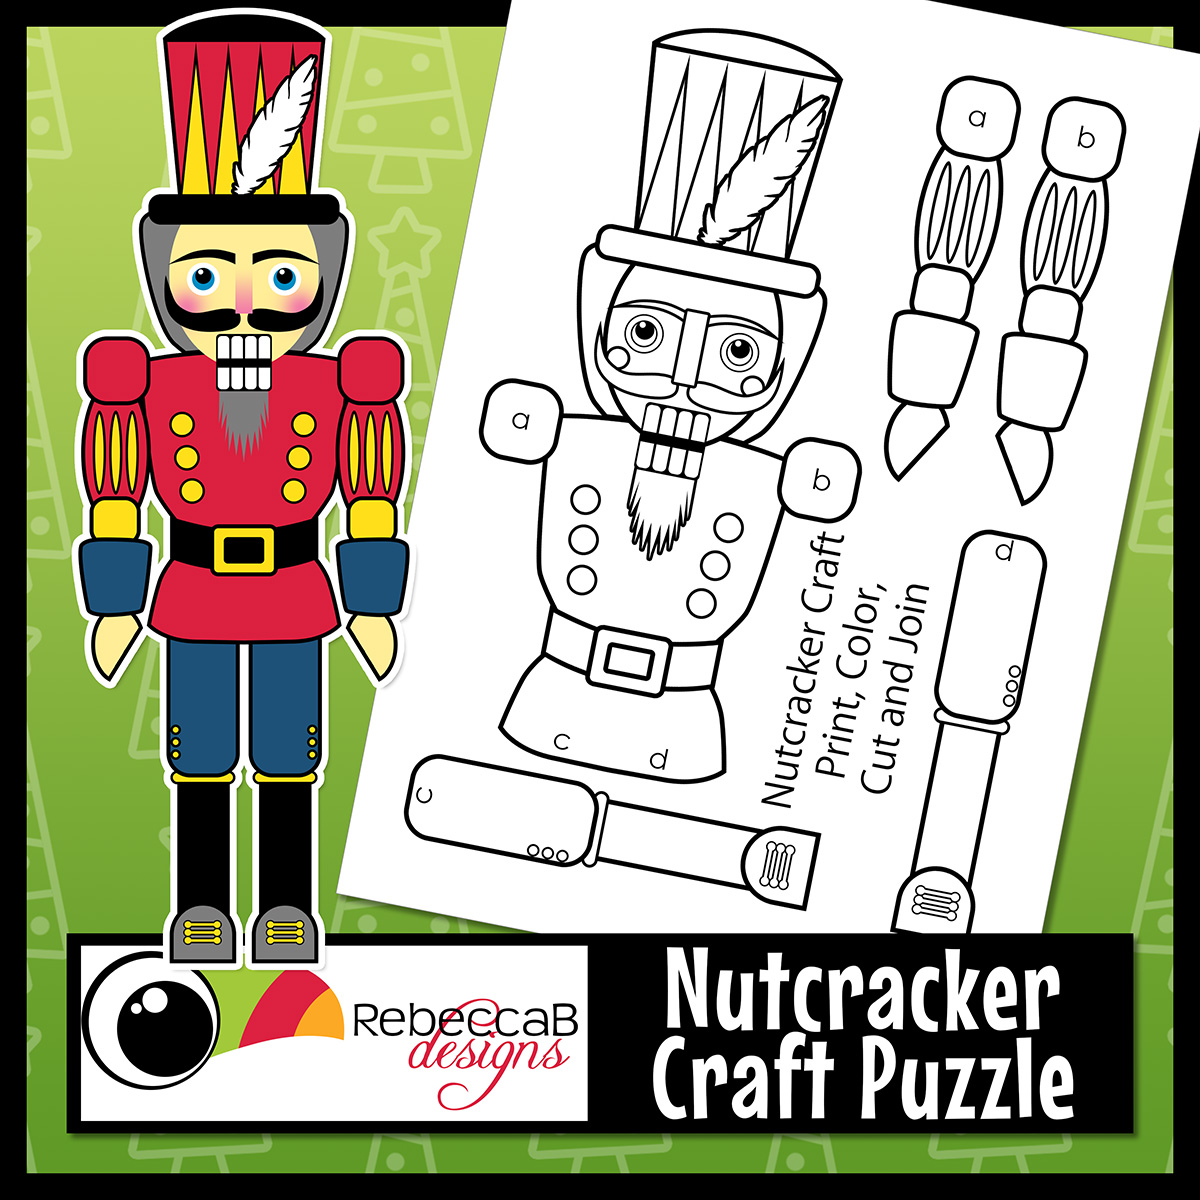 rebeccab-designs-free-printable-nutcracker-craft-puzzle